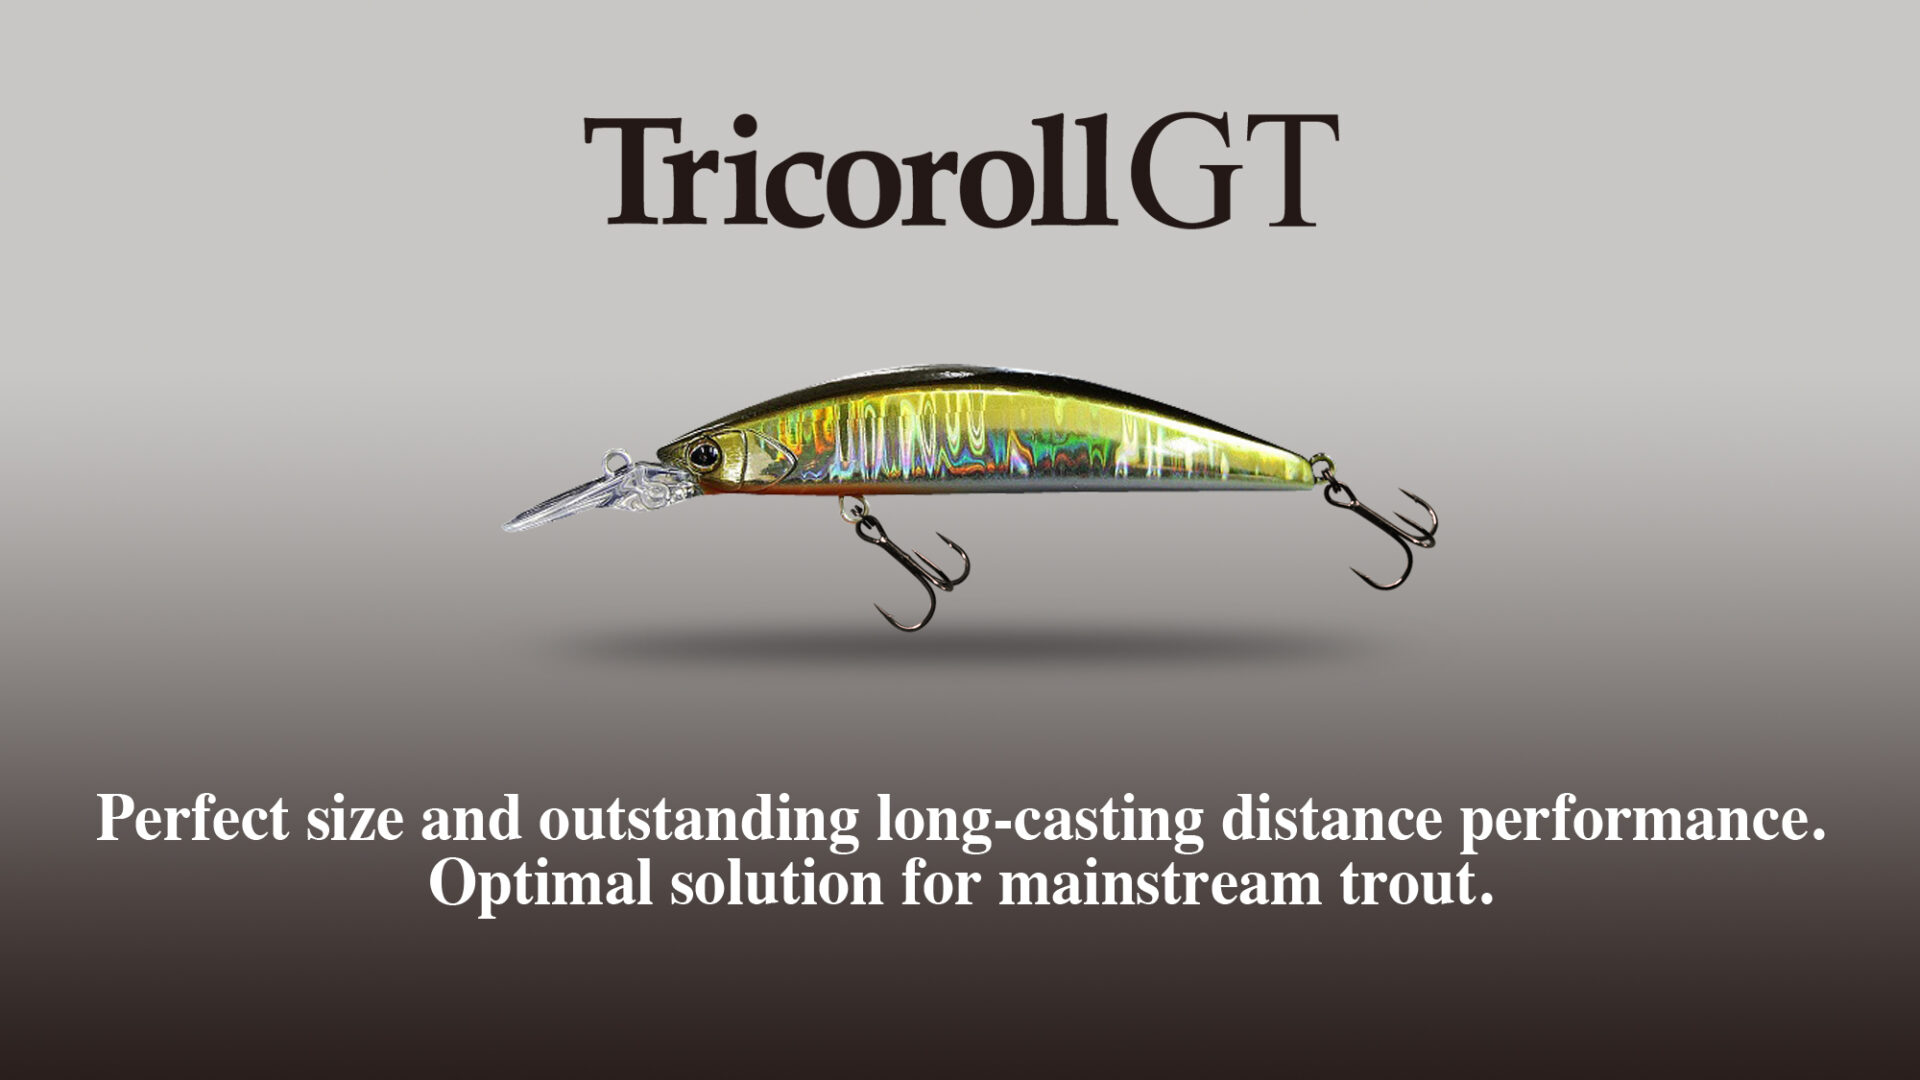  Tricoroll GT